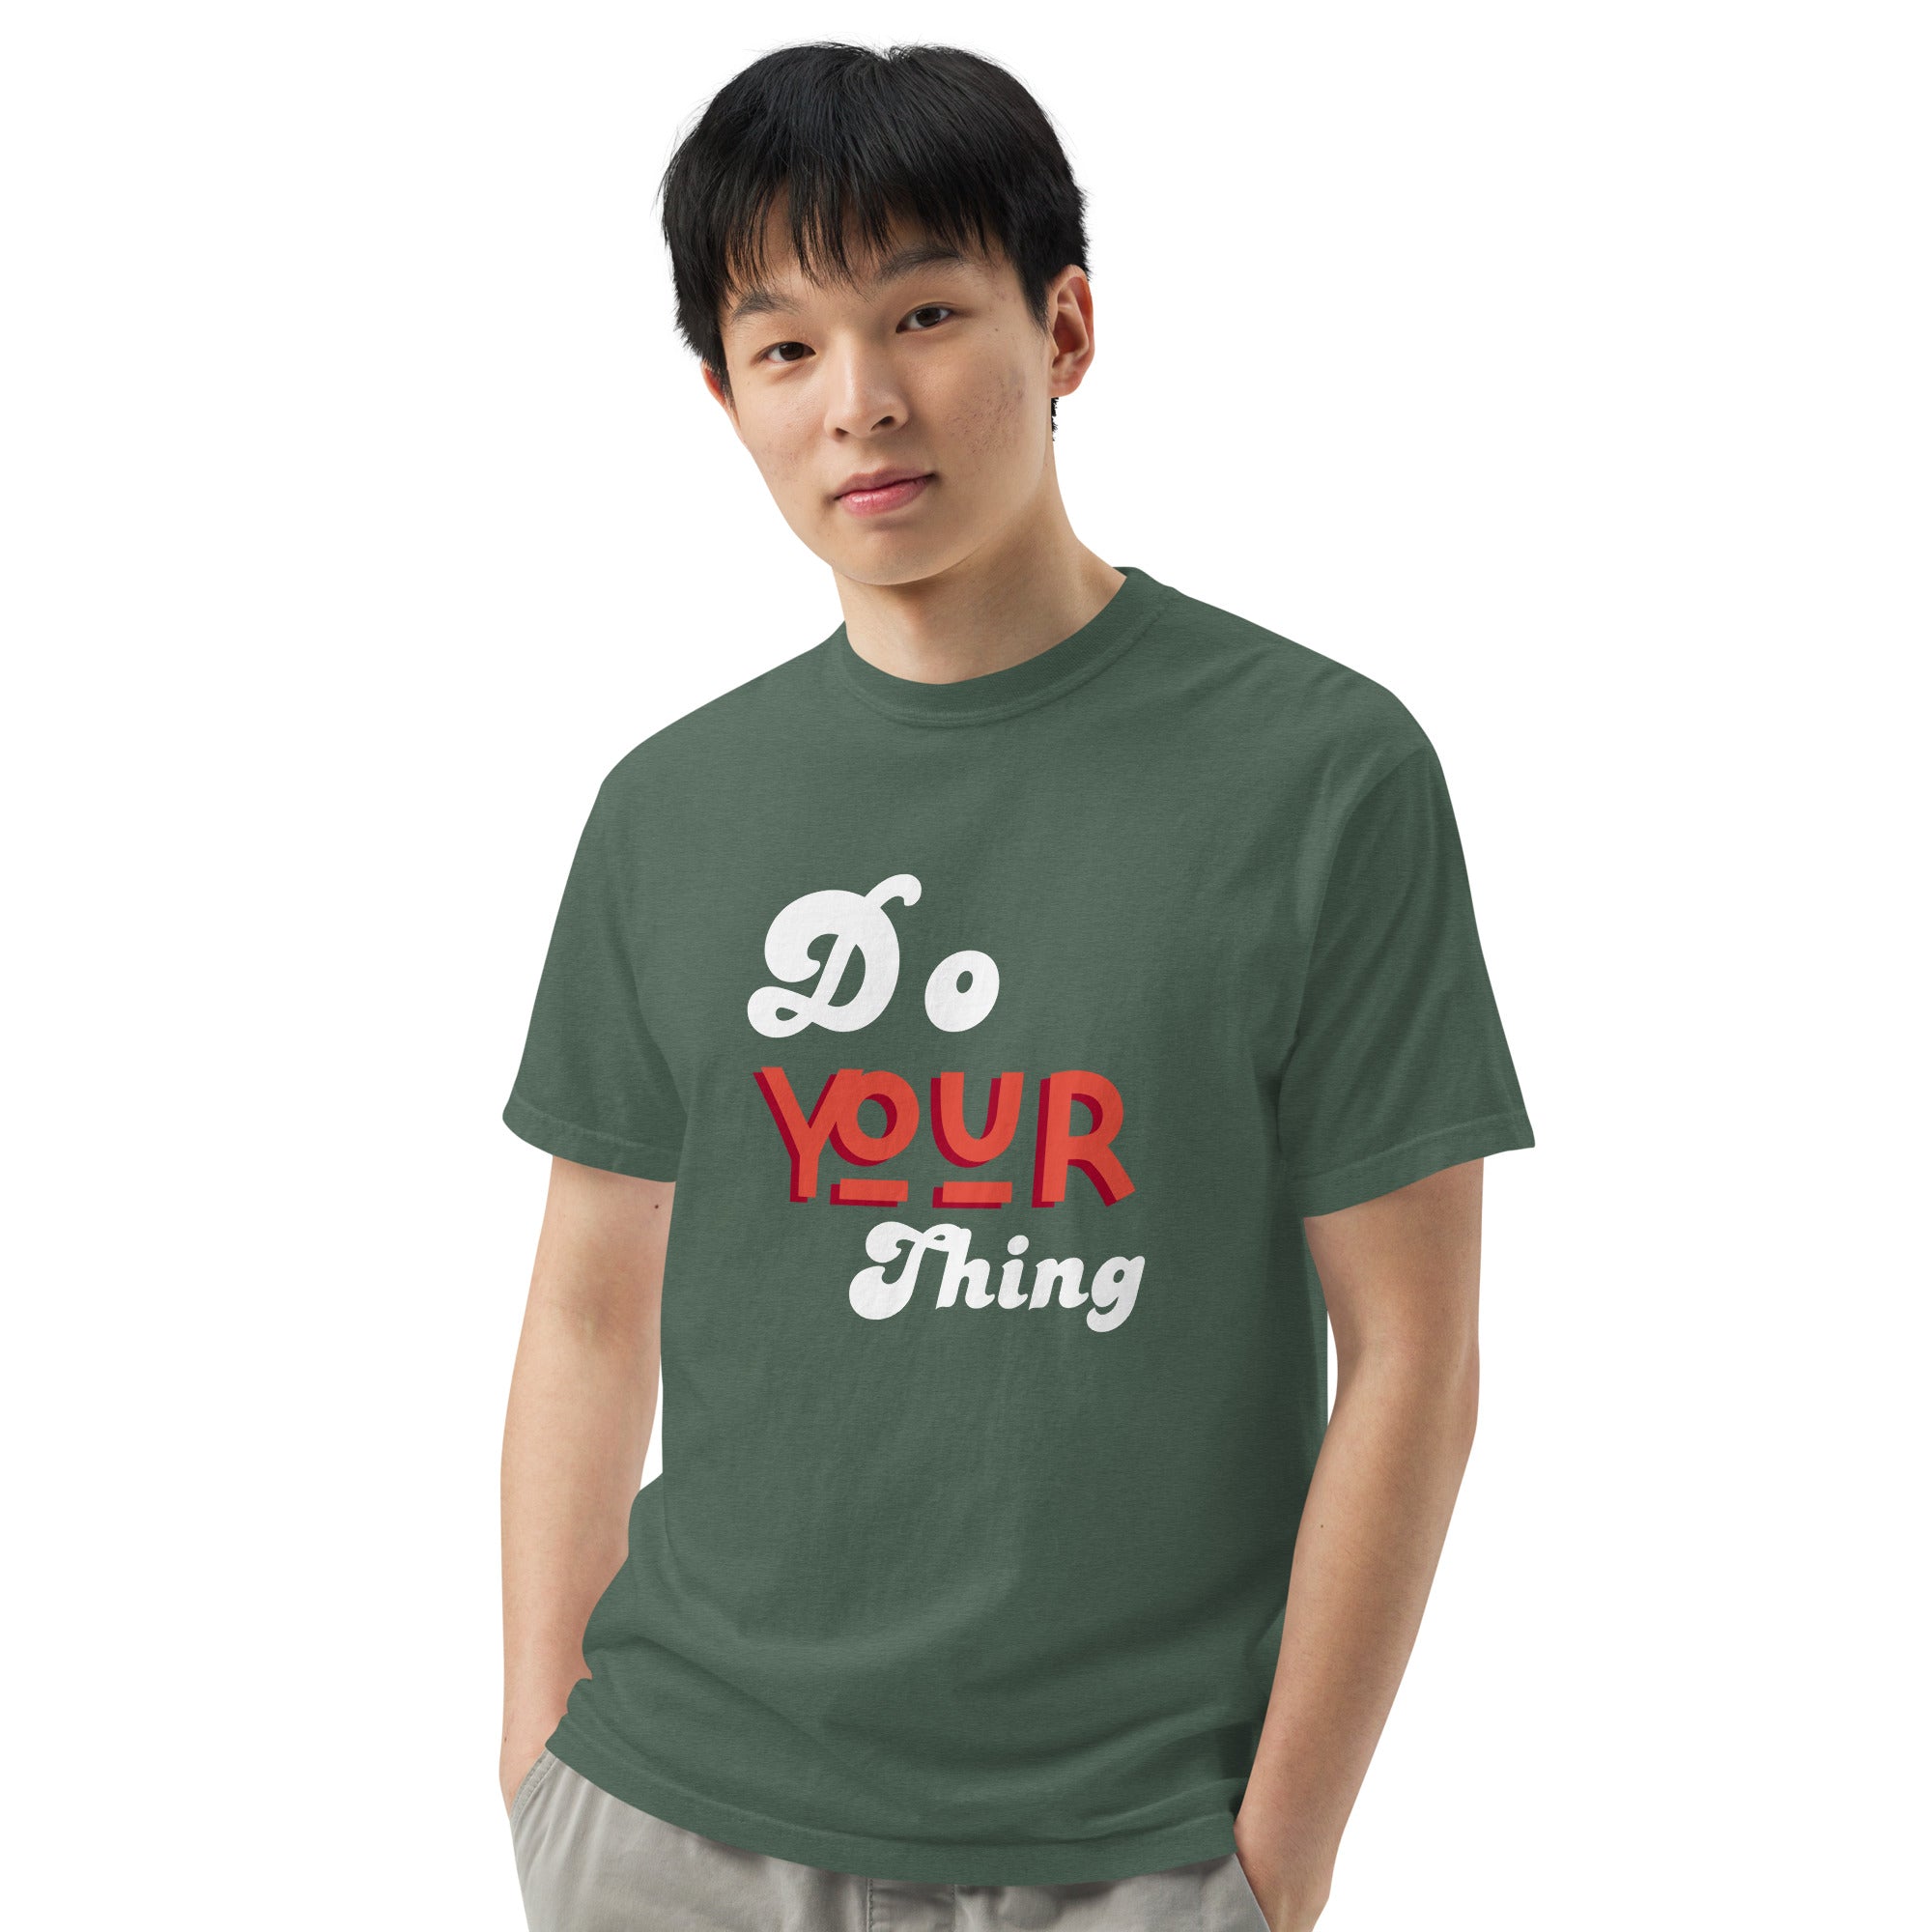 Do Your Thing Heavyweight T-shirt